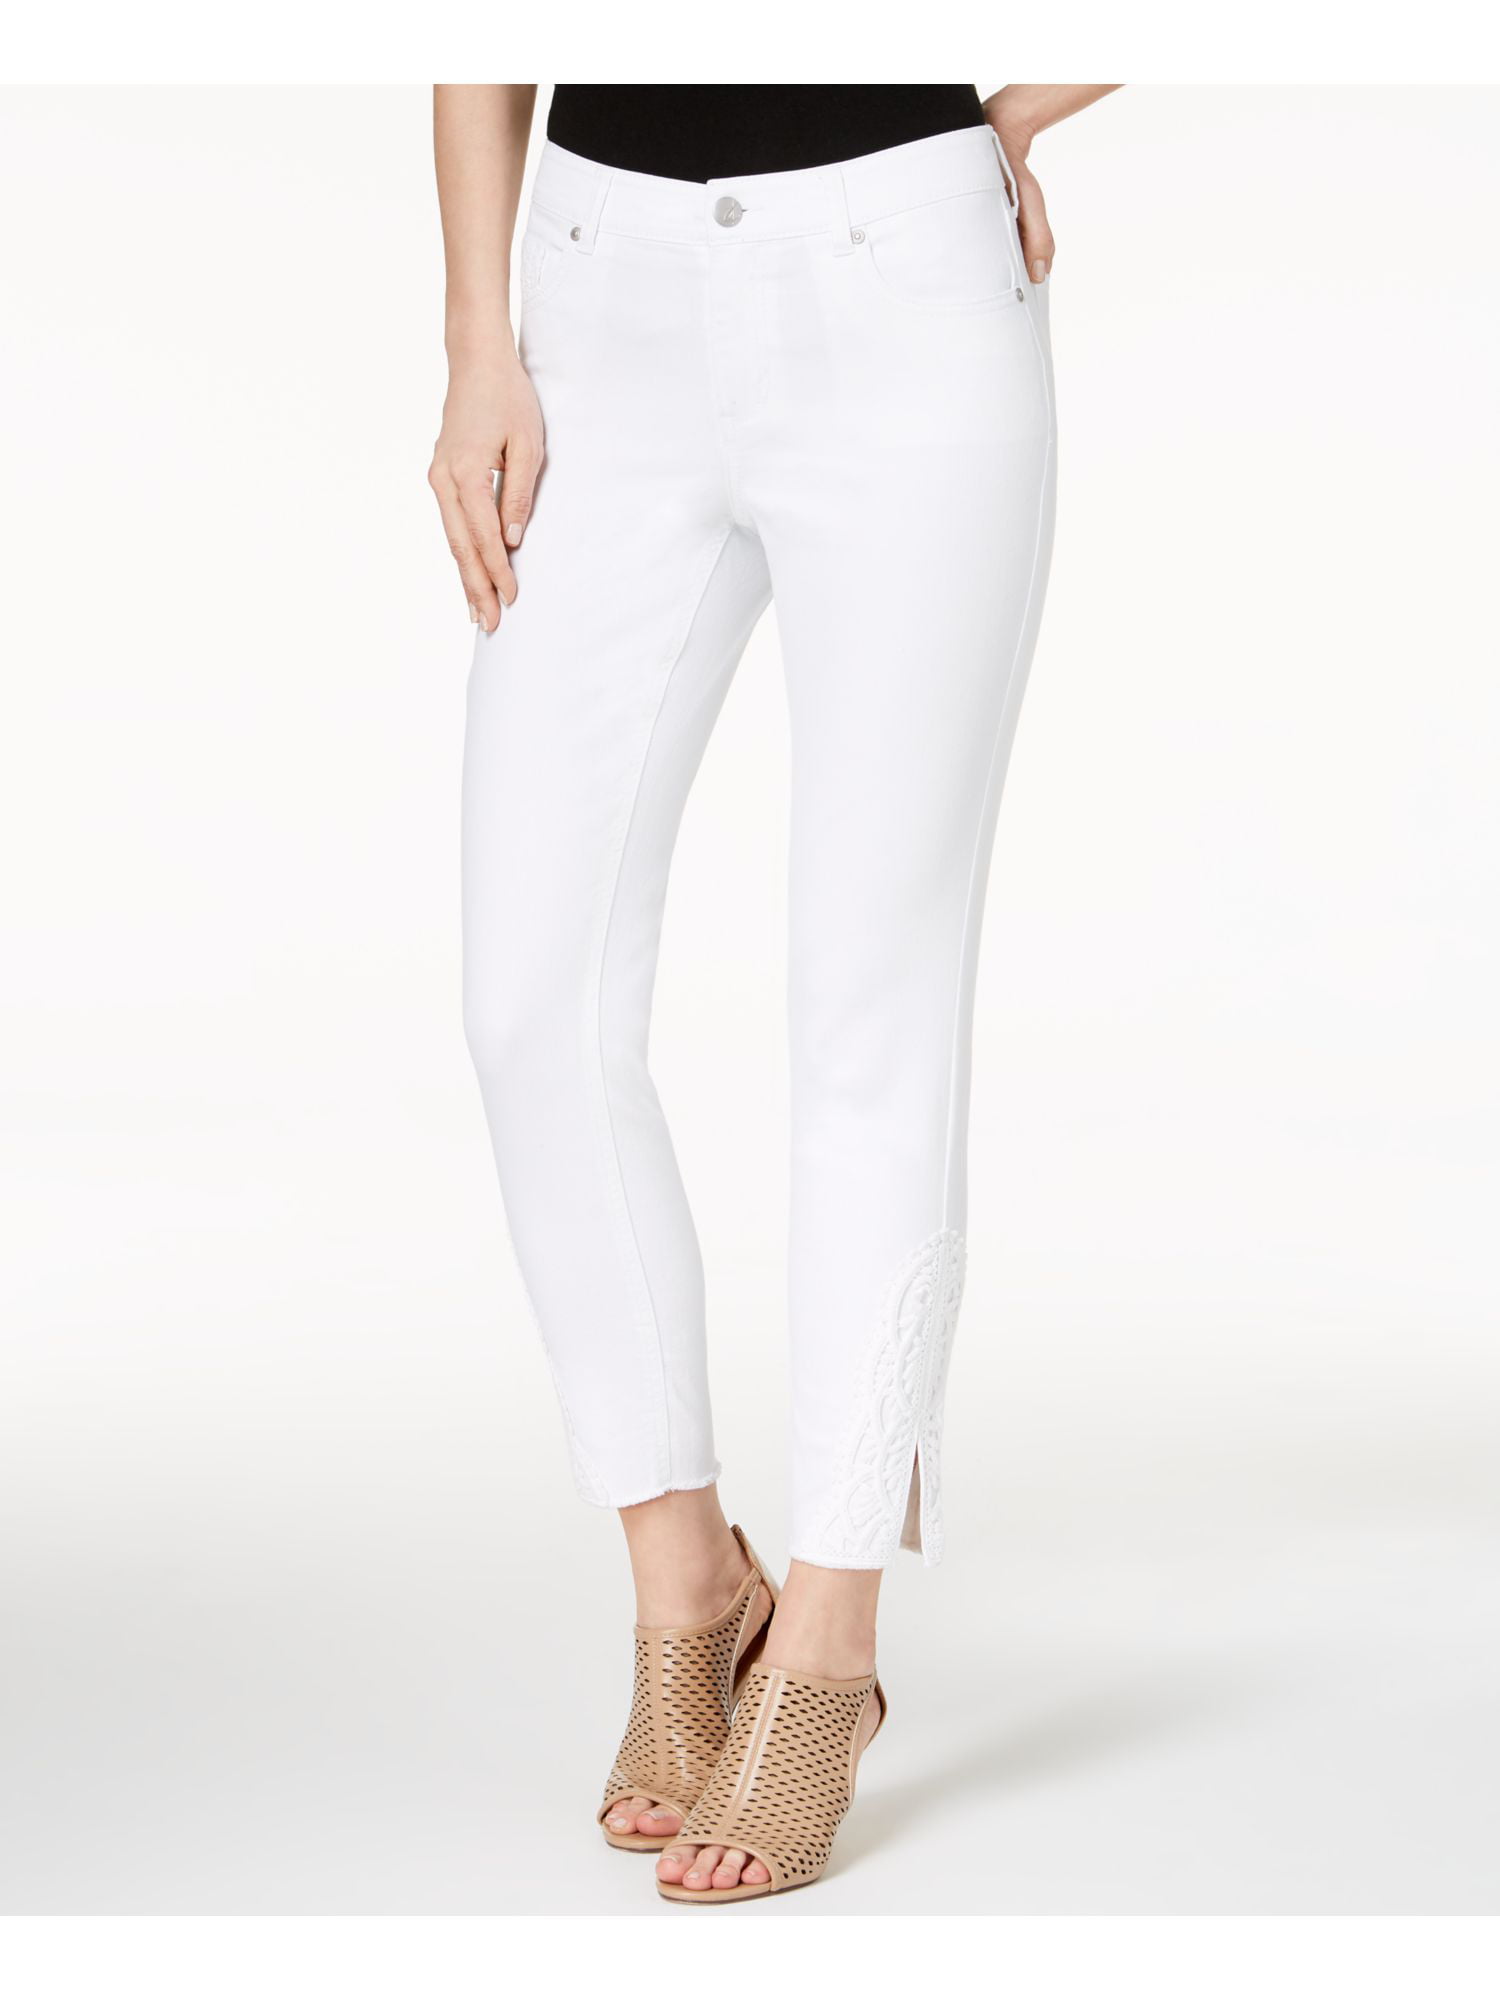 STYLE & COMPANY $65 Womens New 0363 White Casual Jeans 14 B+B - Walmart.com